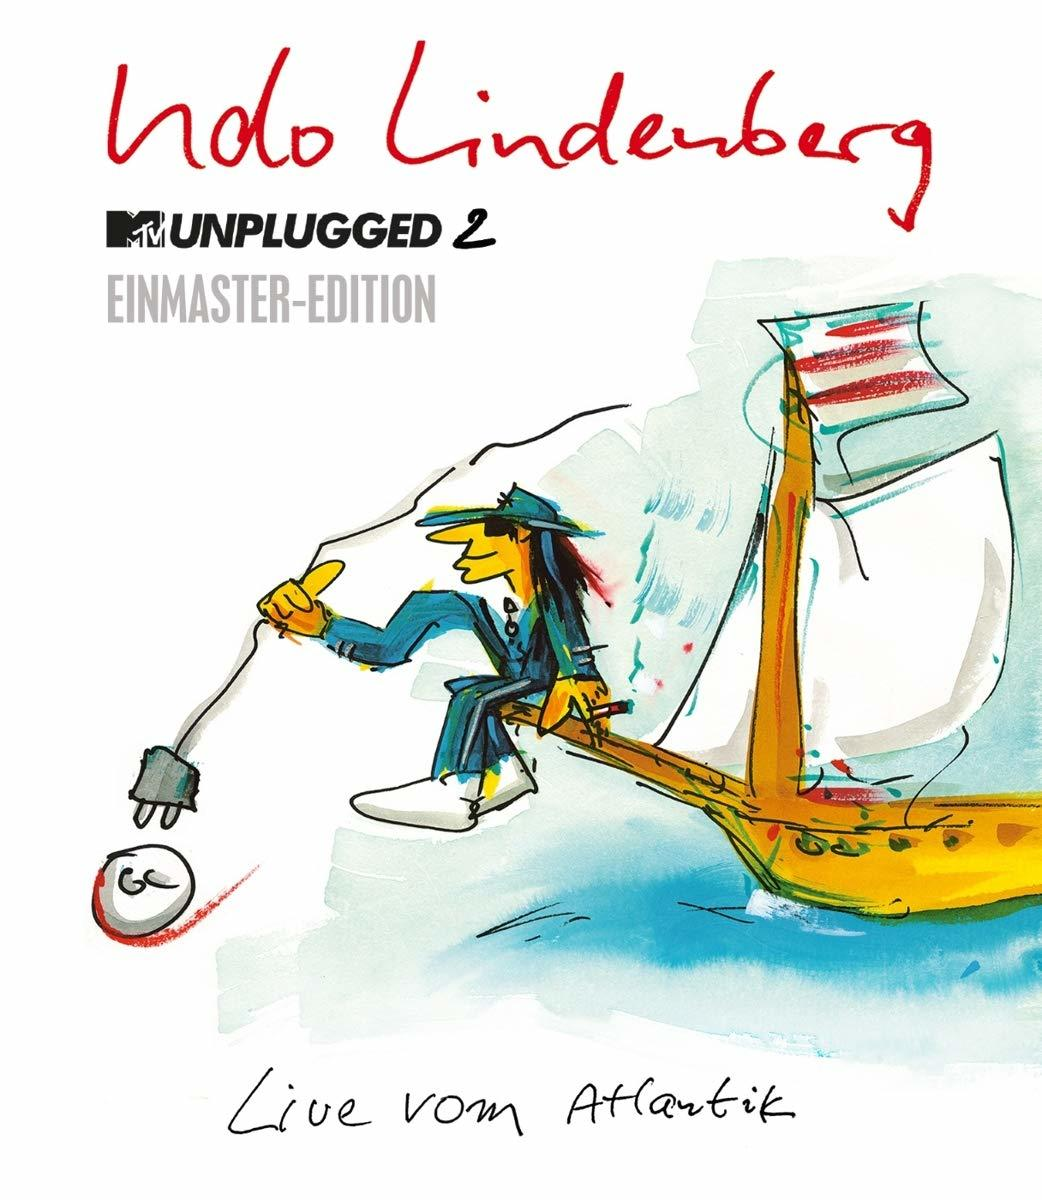 2 (Blu-ray) Atlantik vom - Unplugged (Blu-ray) - - Udo Lindenberg Live MTV